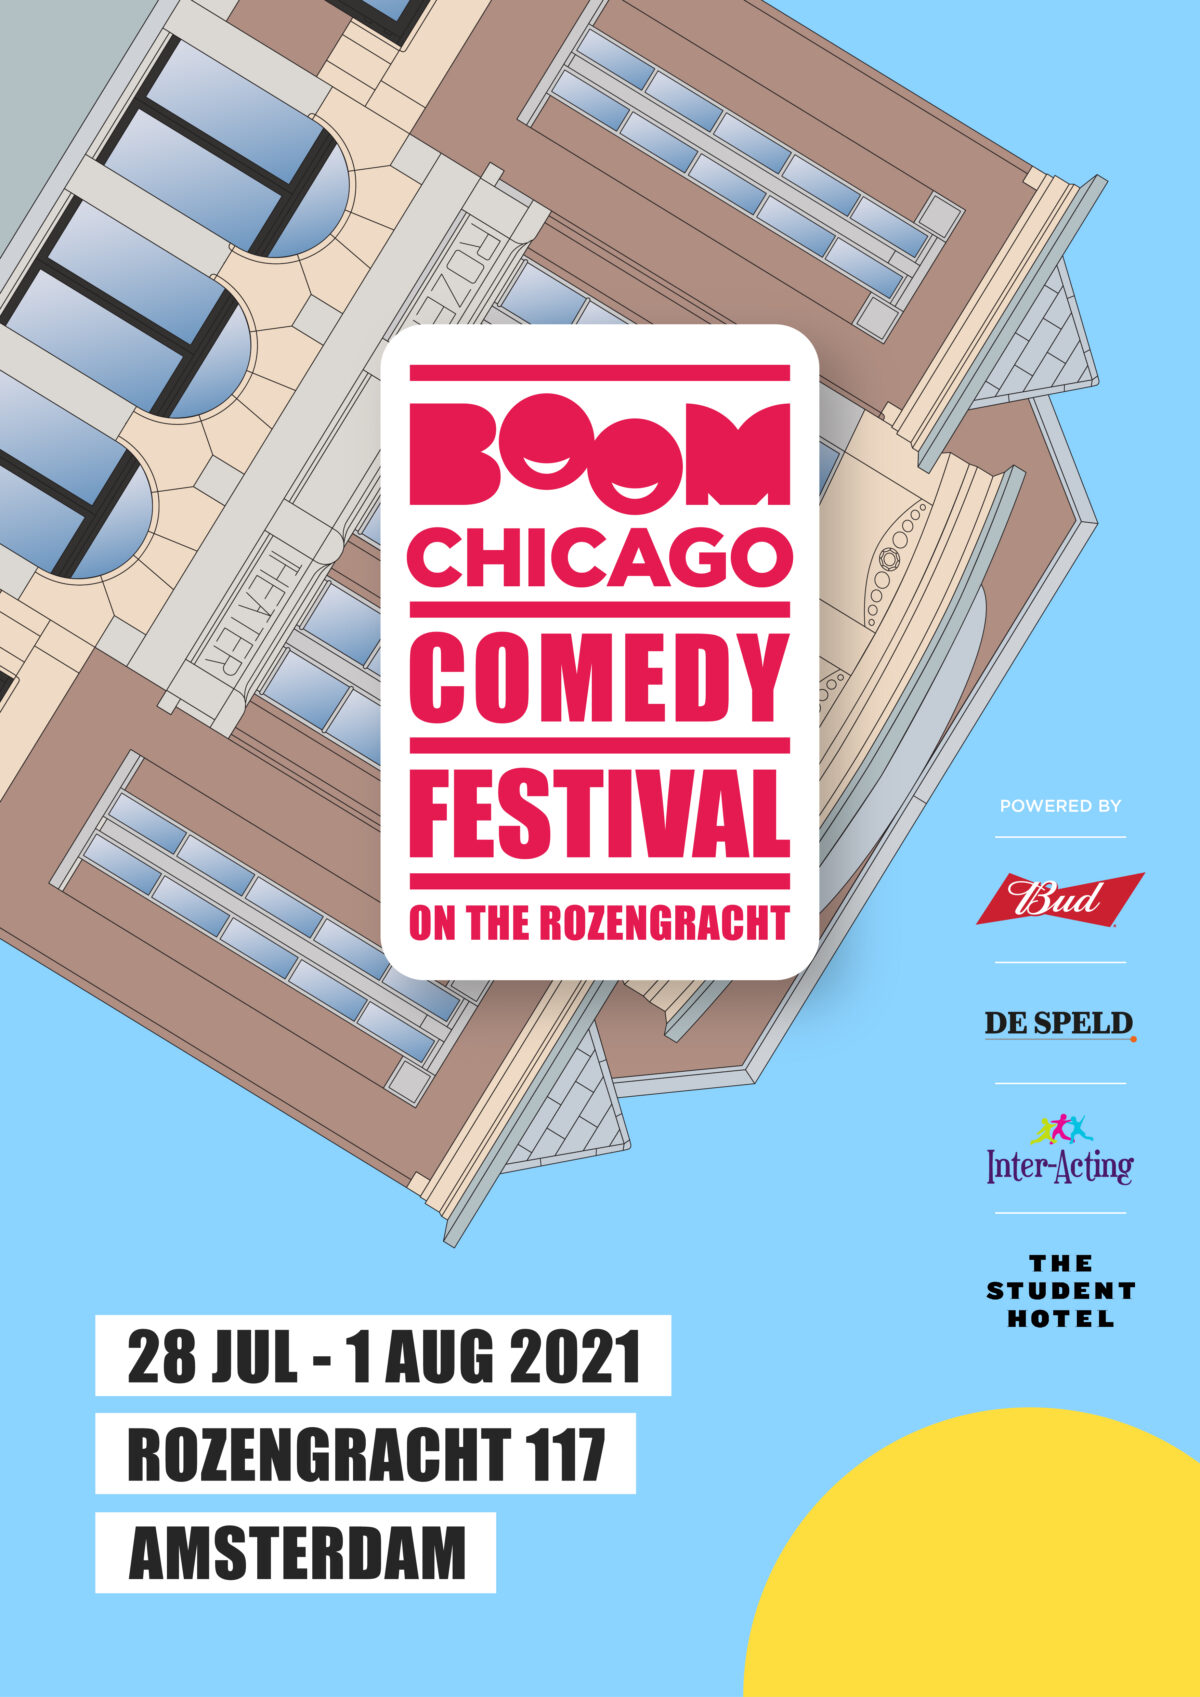 Boom Chicago Comedy Festival